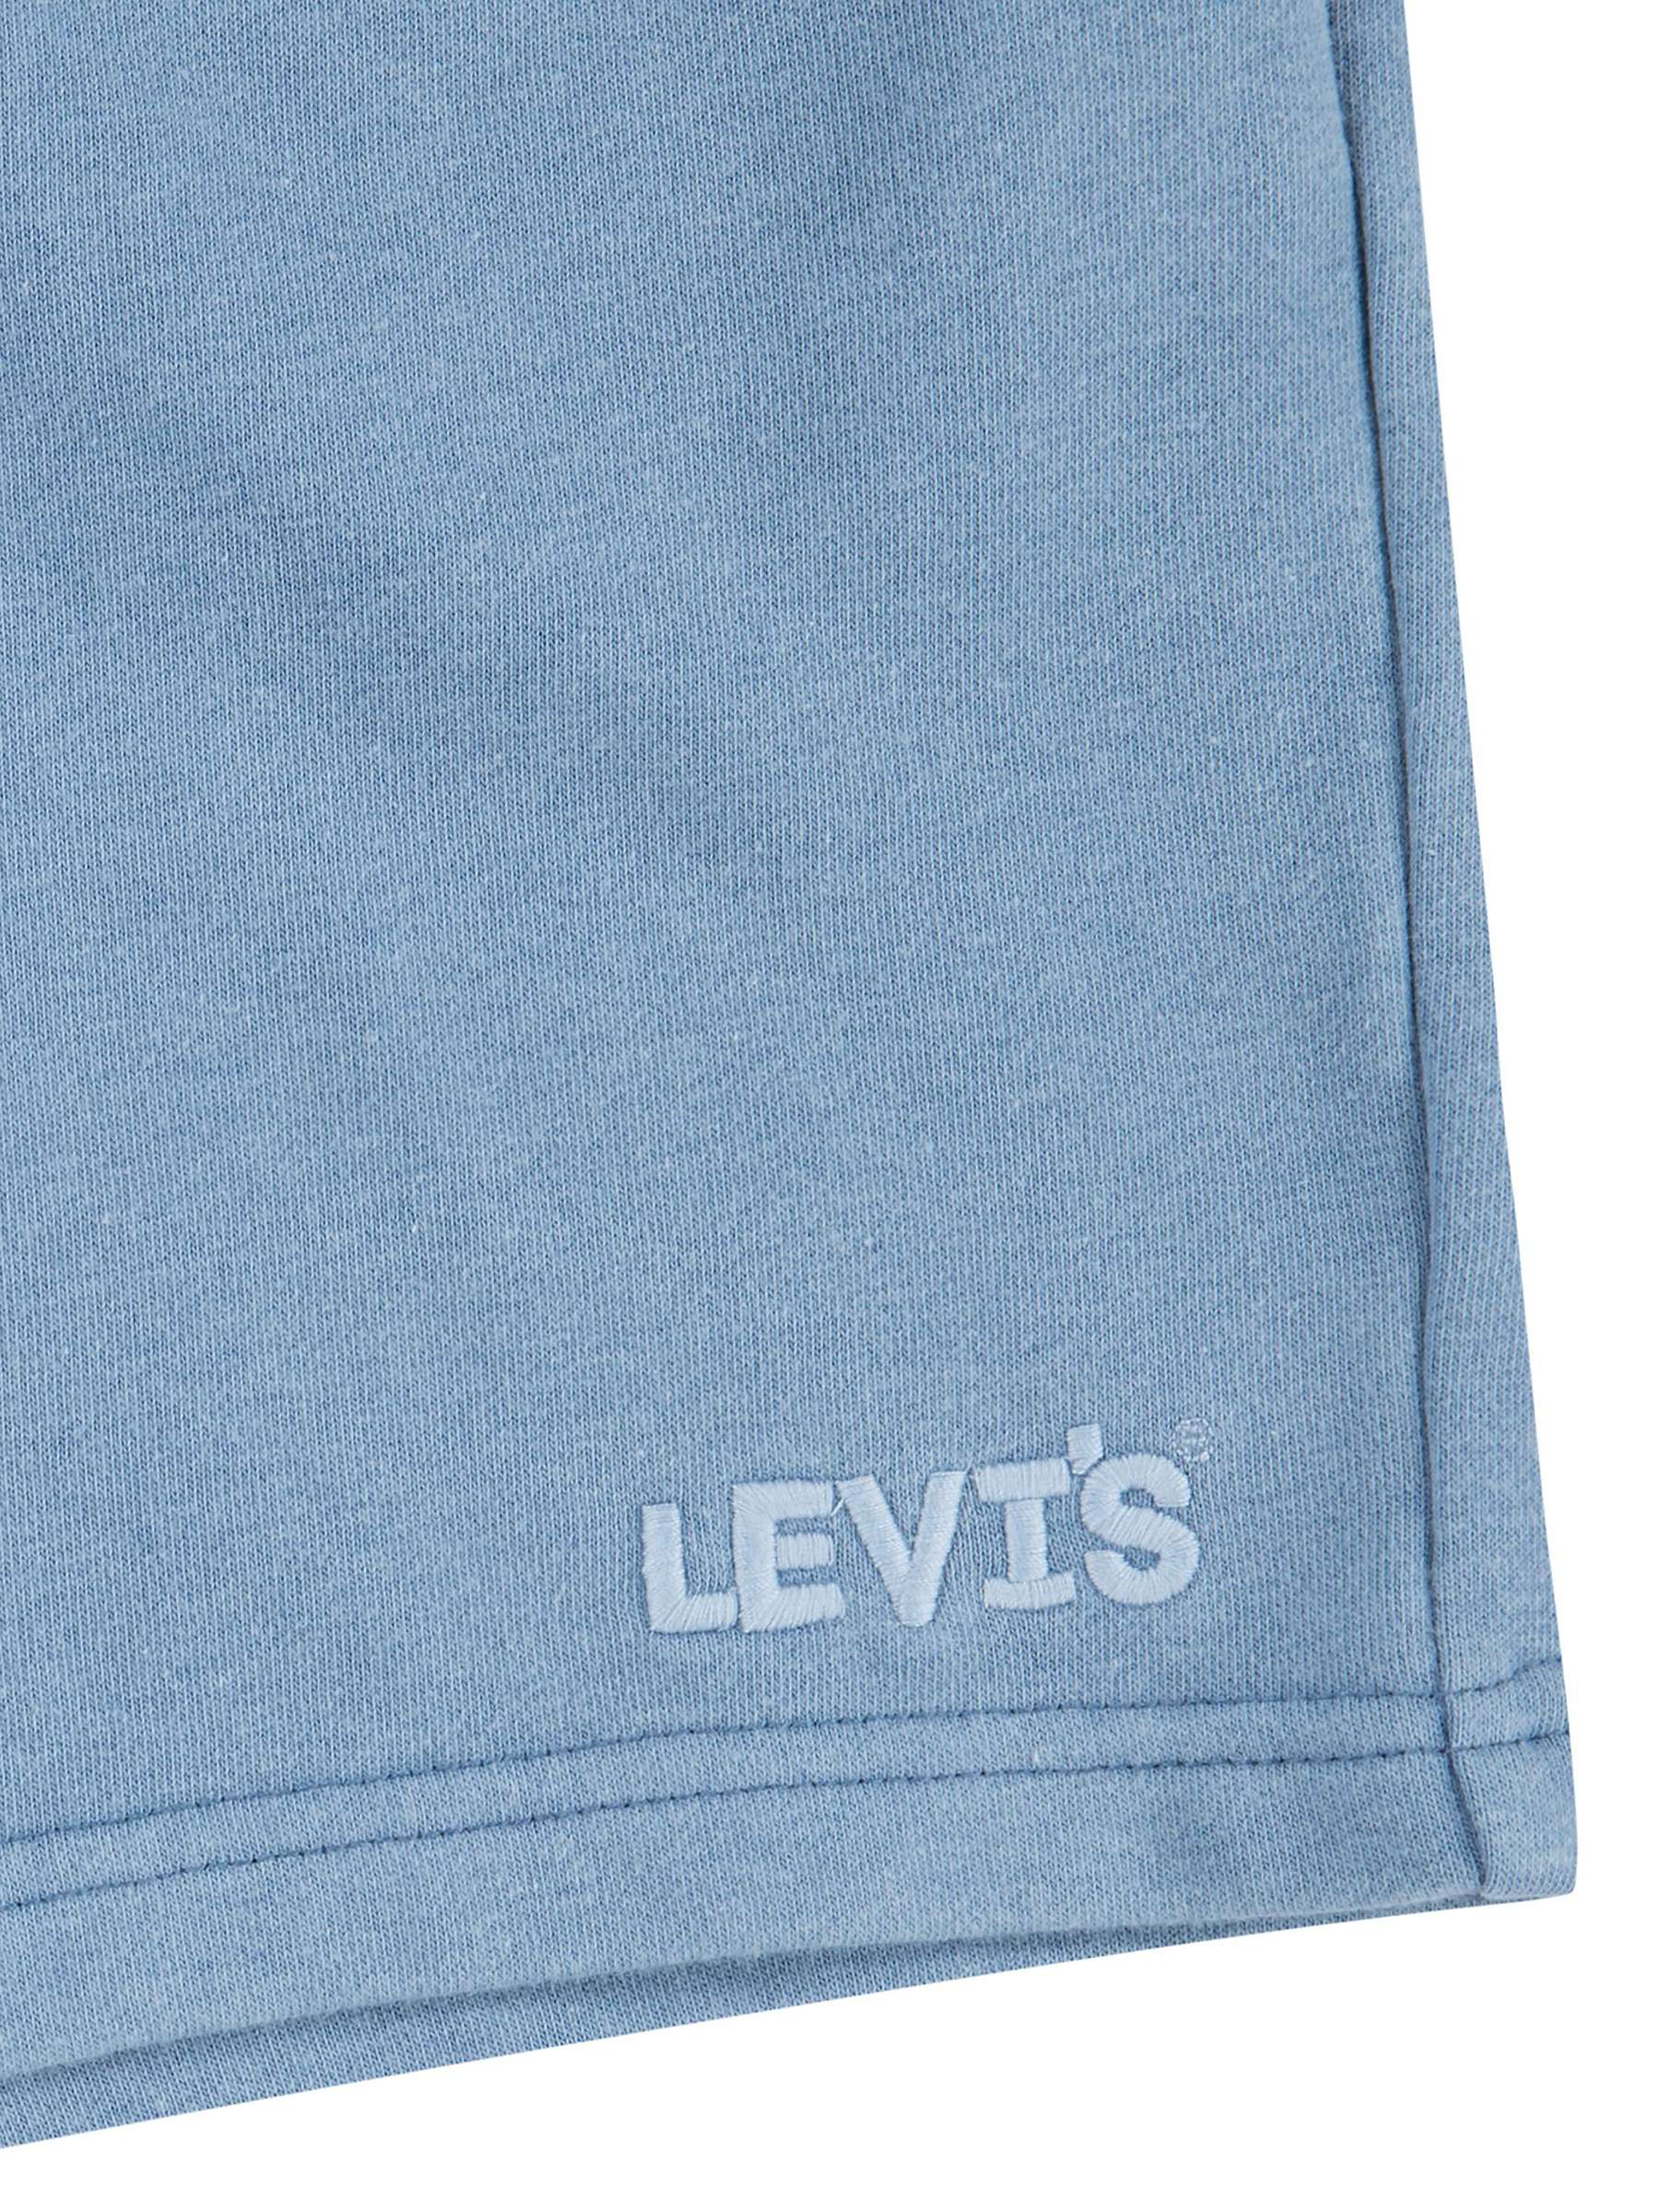 Buy Levi's Kids' Lived-In Jogger Shorts, Coronet Blue Online at johnlewis.com